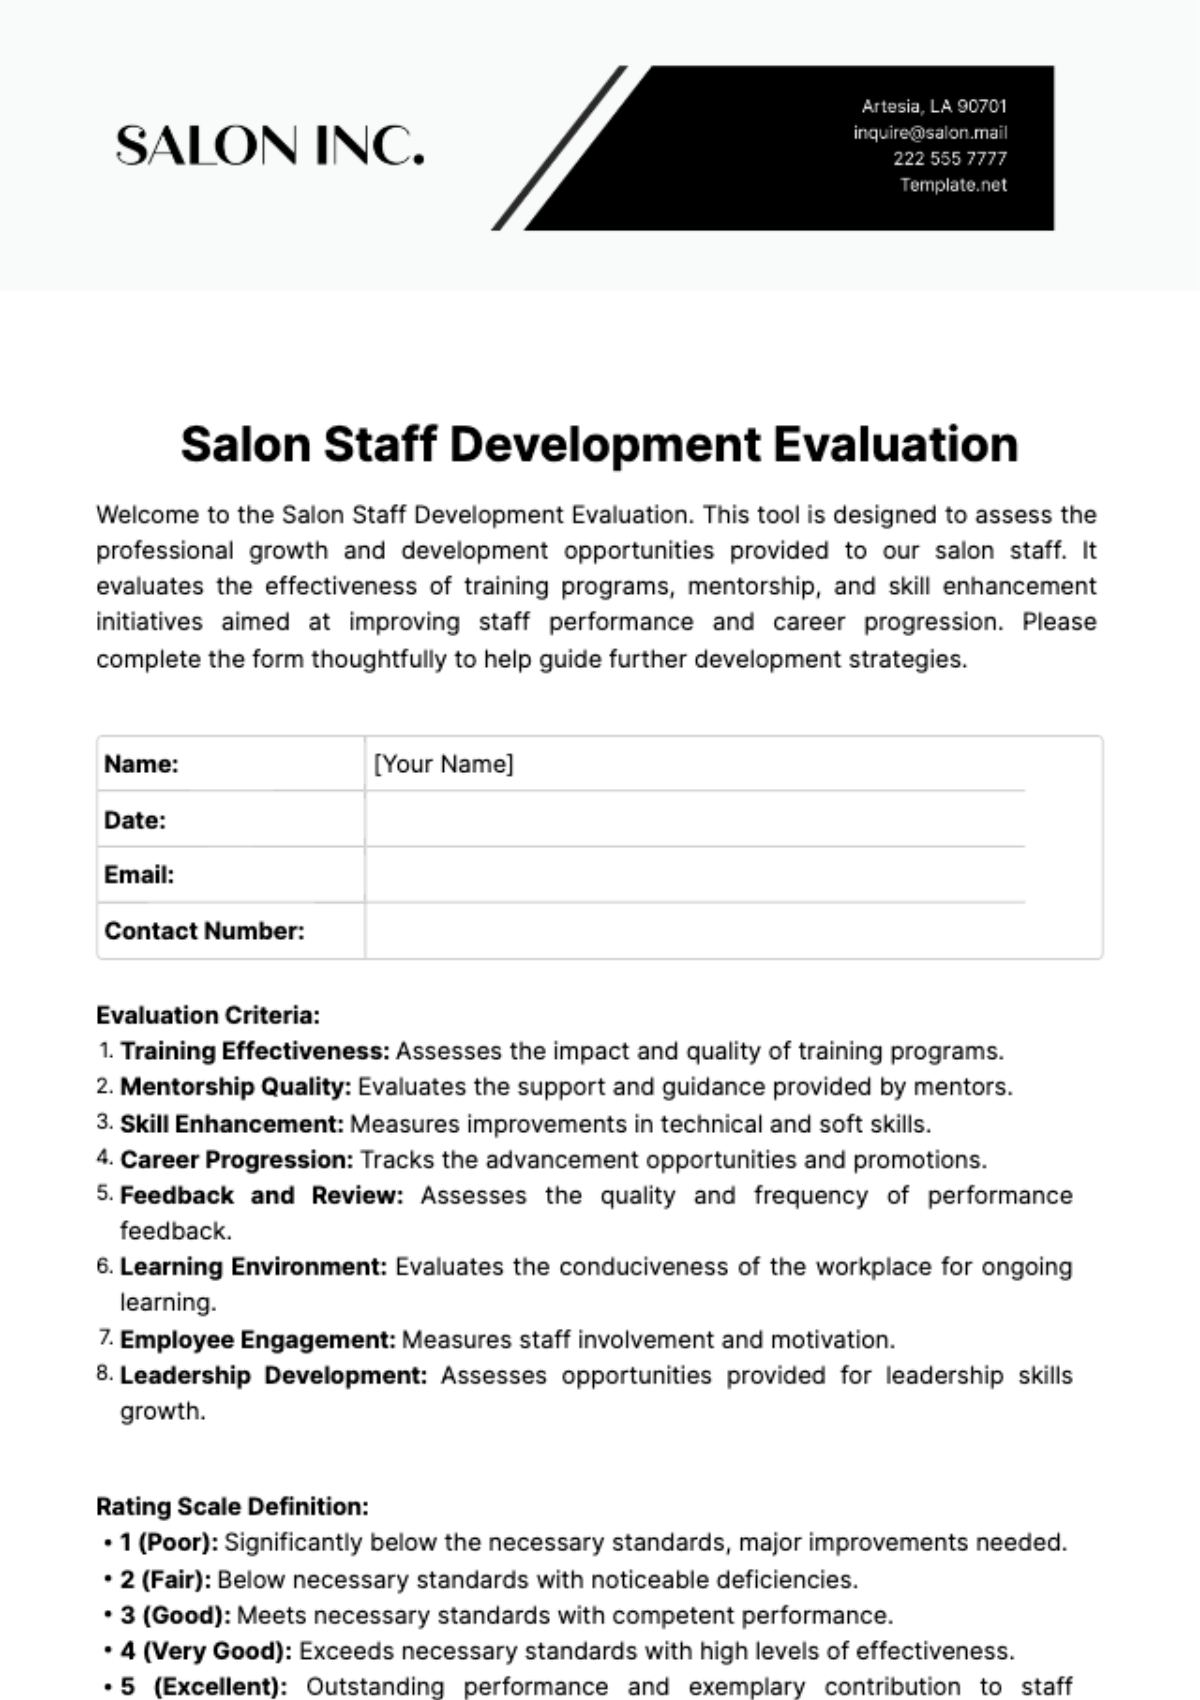 Salon Staff Development Evaluation Template